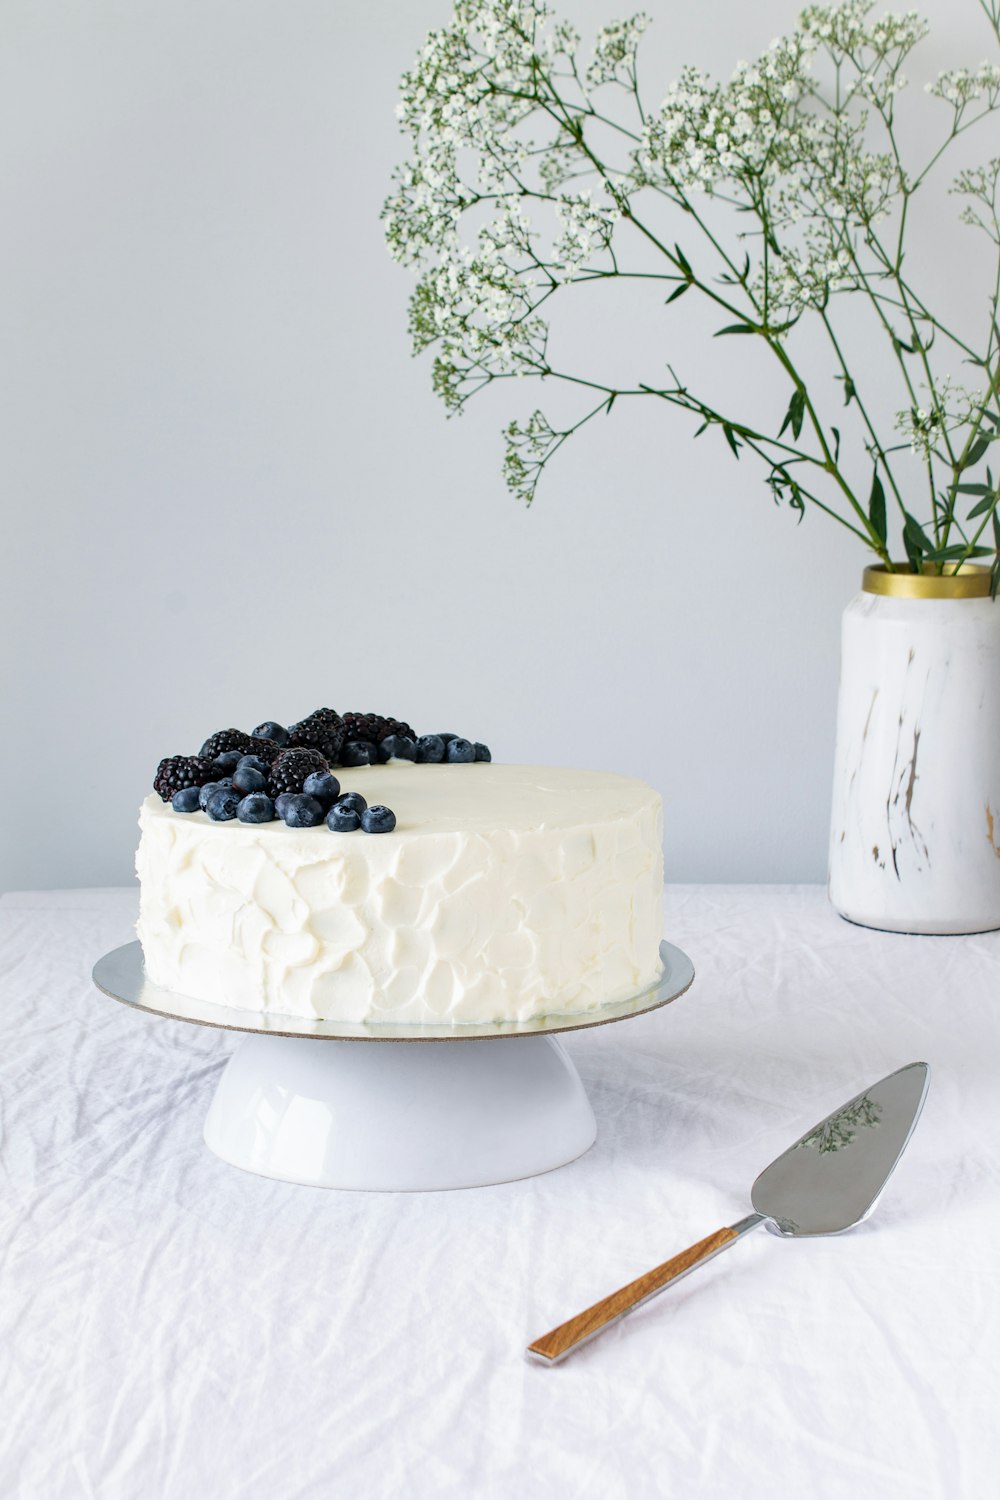 black berries on white cake